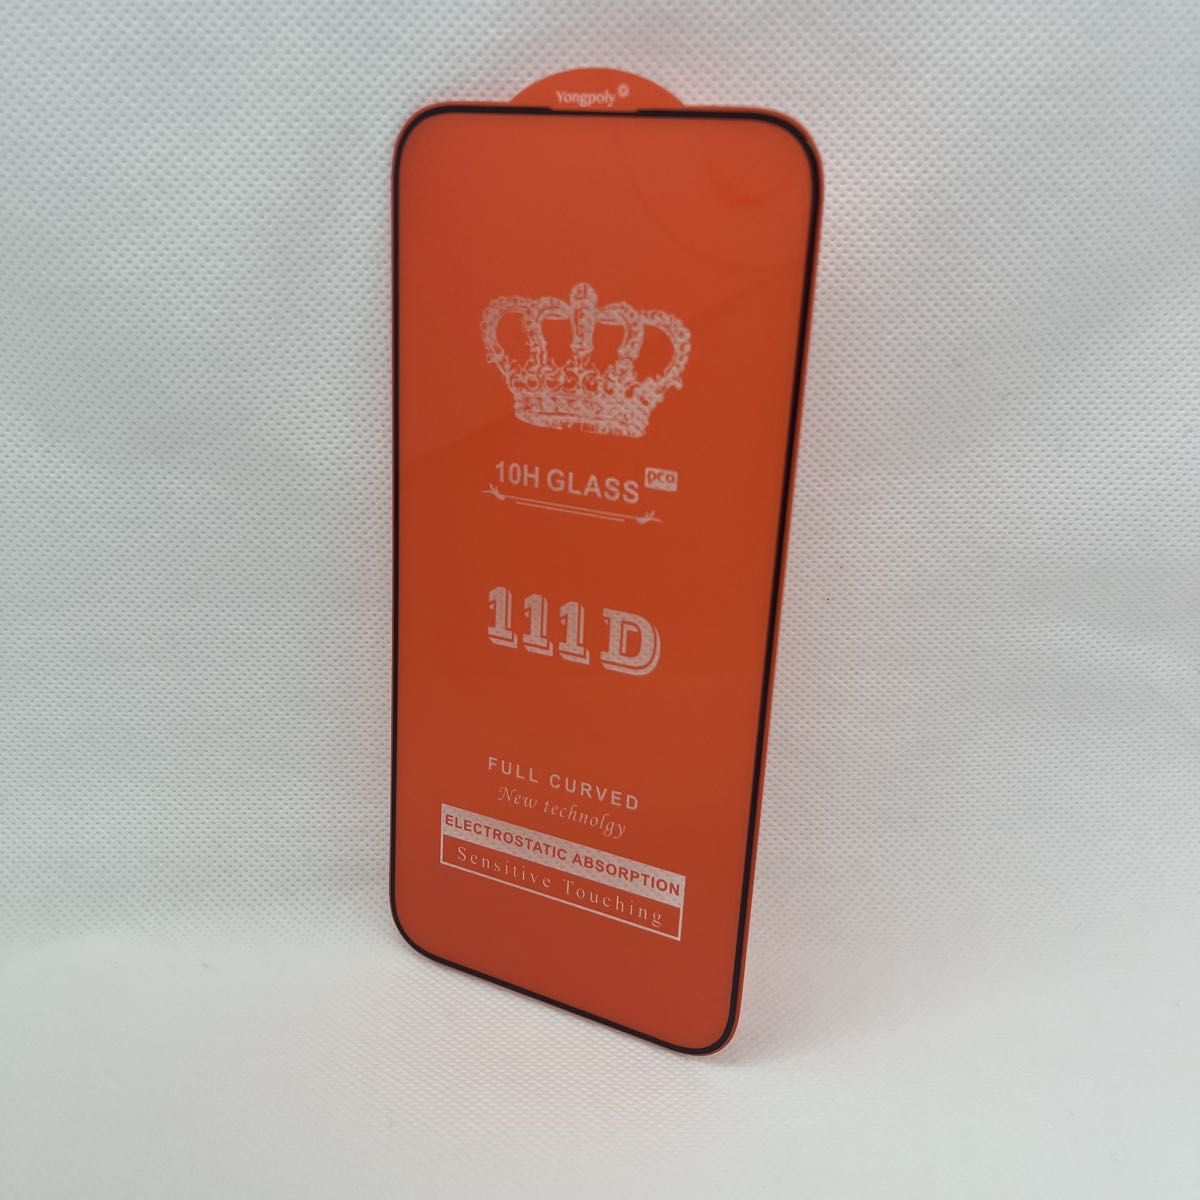 iPhone 15Plus / iPhone15ProMax対応 10H採用全面保護強化ガラスフィルム